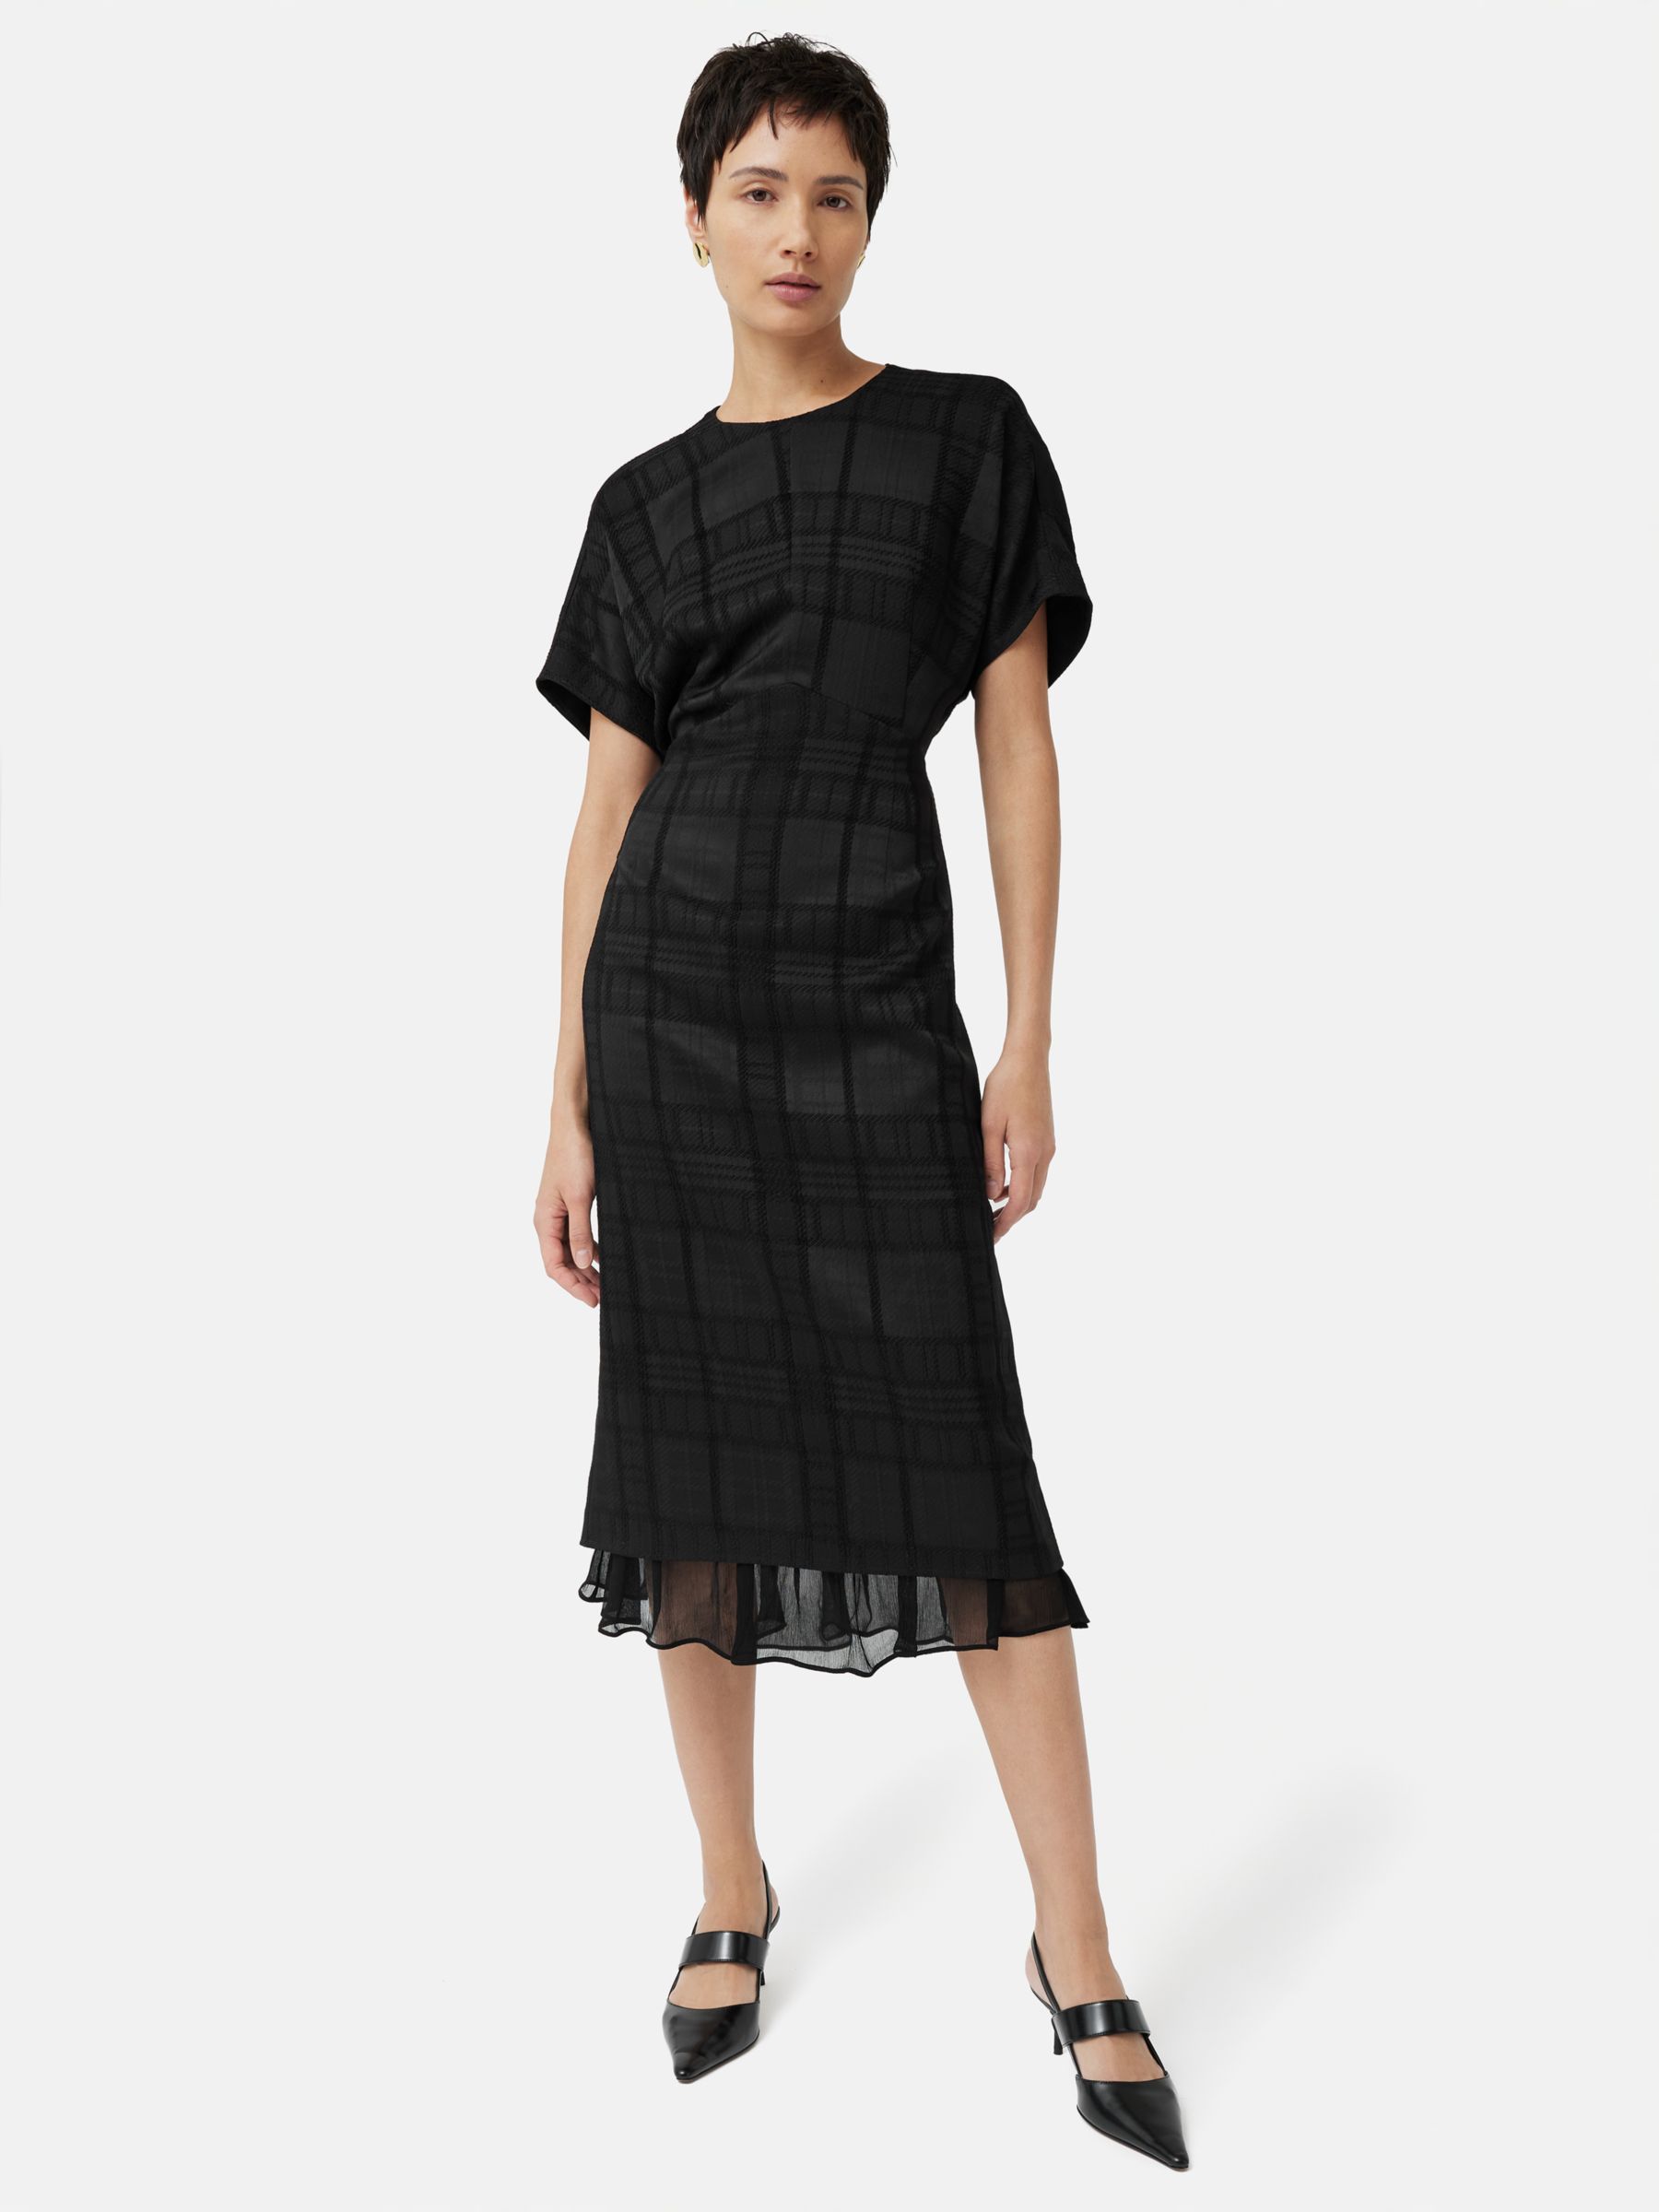 Jigsaw Textured Jacquard Check Midi Dress, Black at John Lewis & Partners